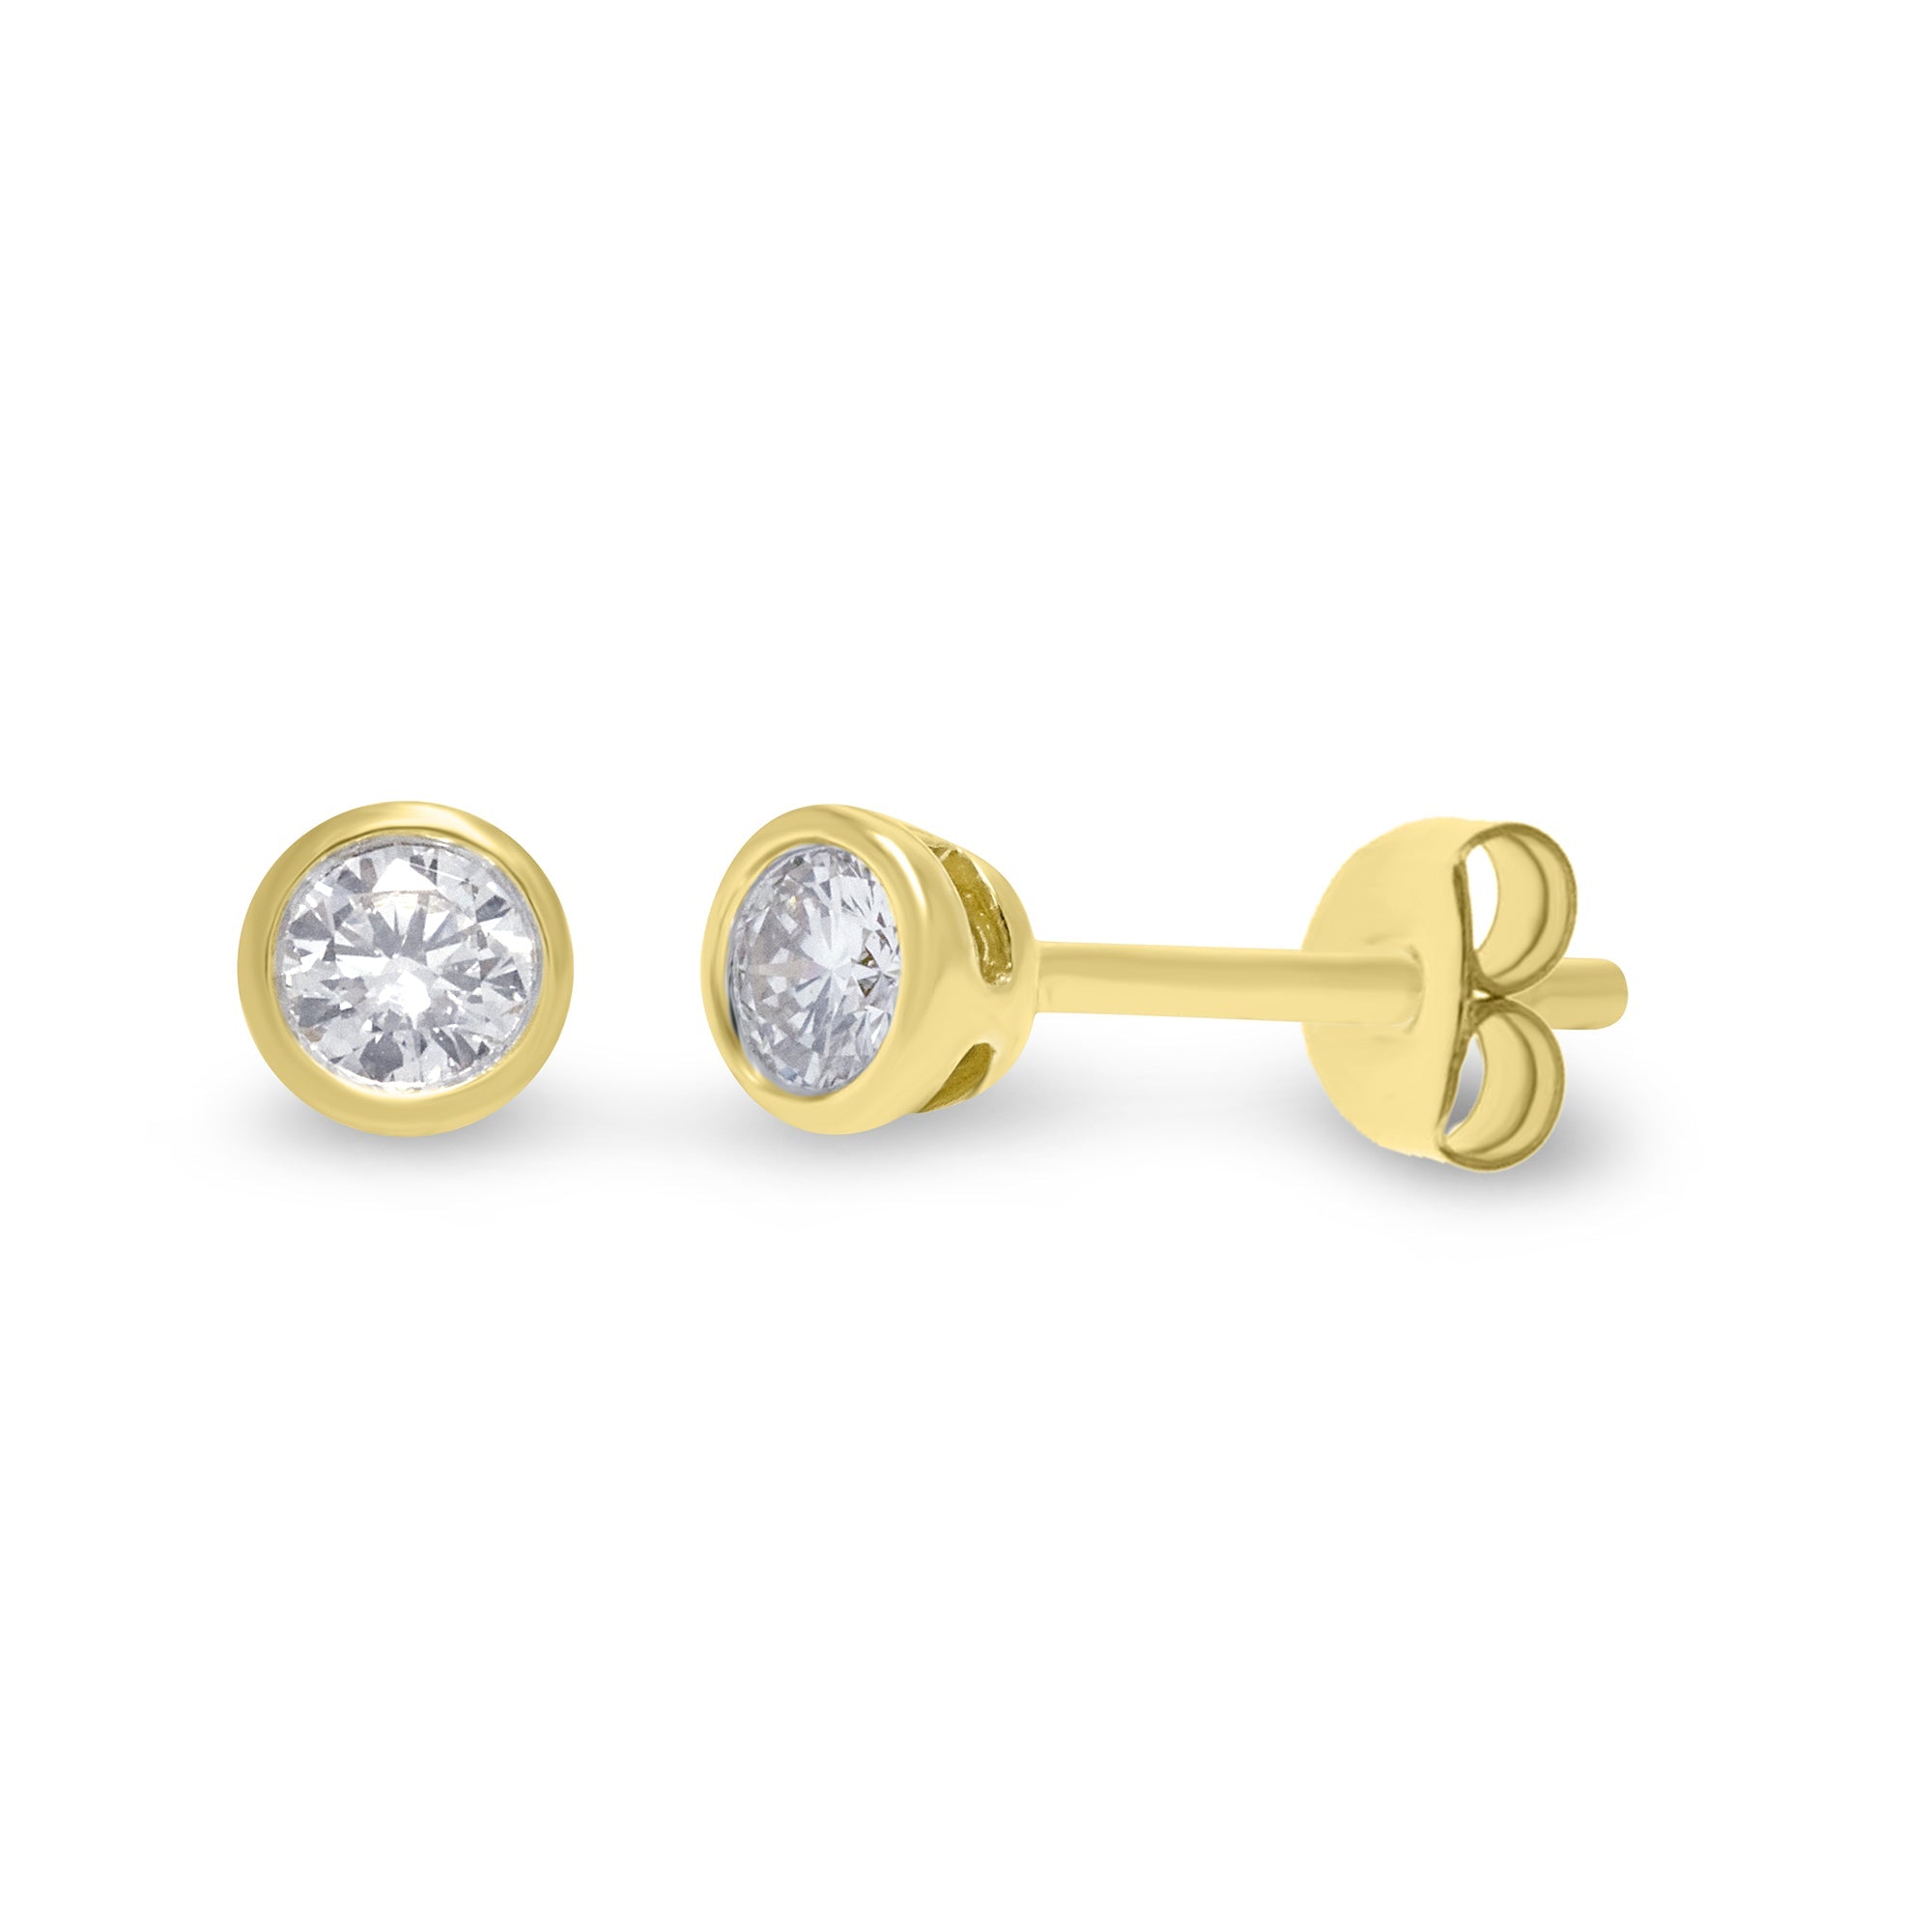 9ct gold rub over set diamond stud earrings 0.15ct